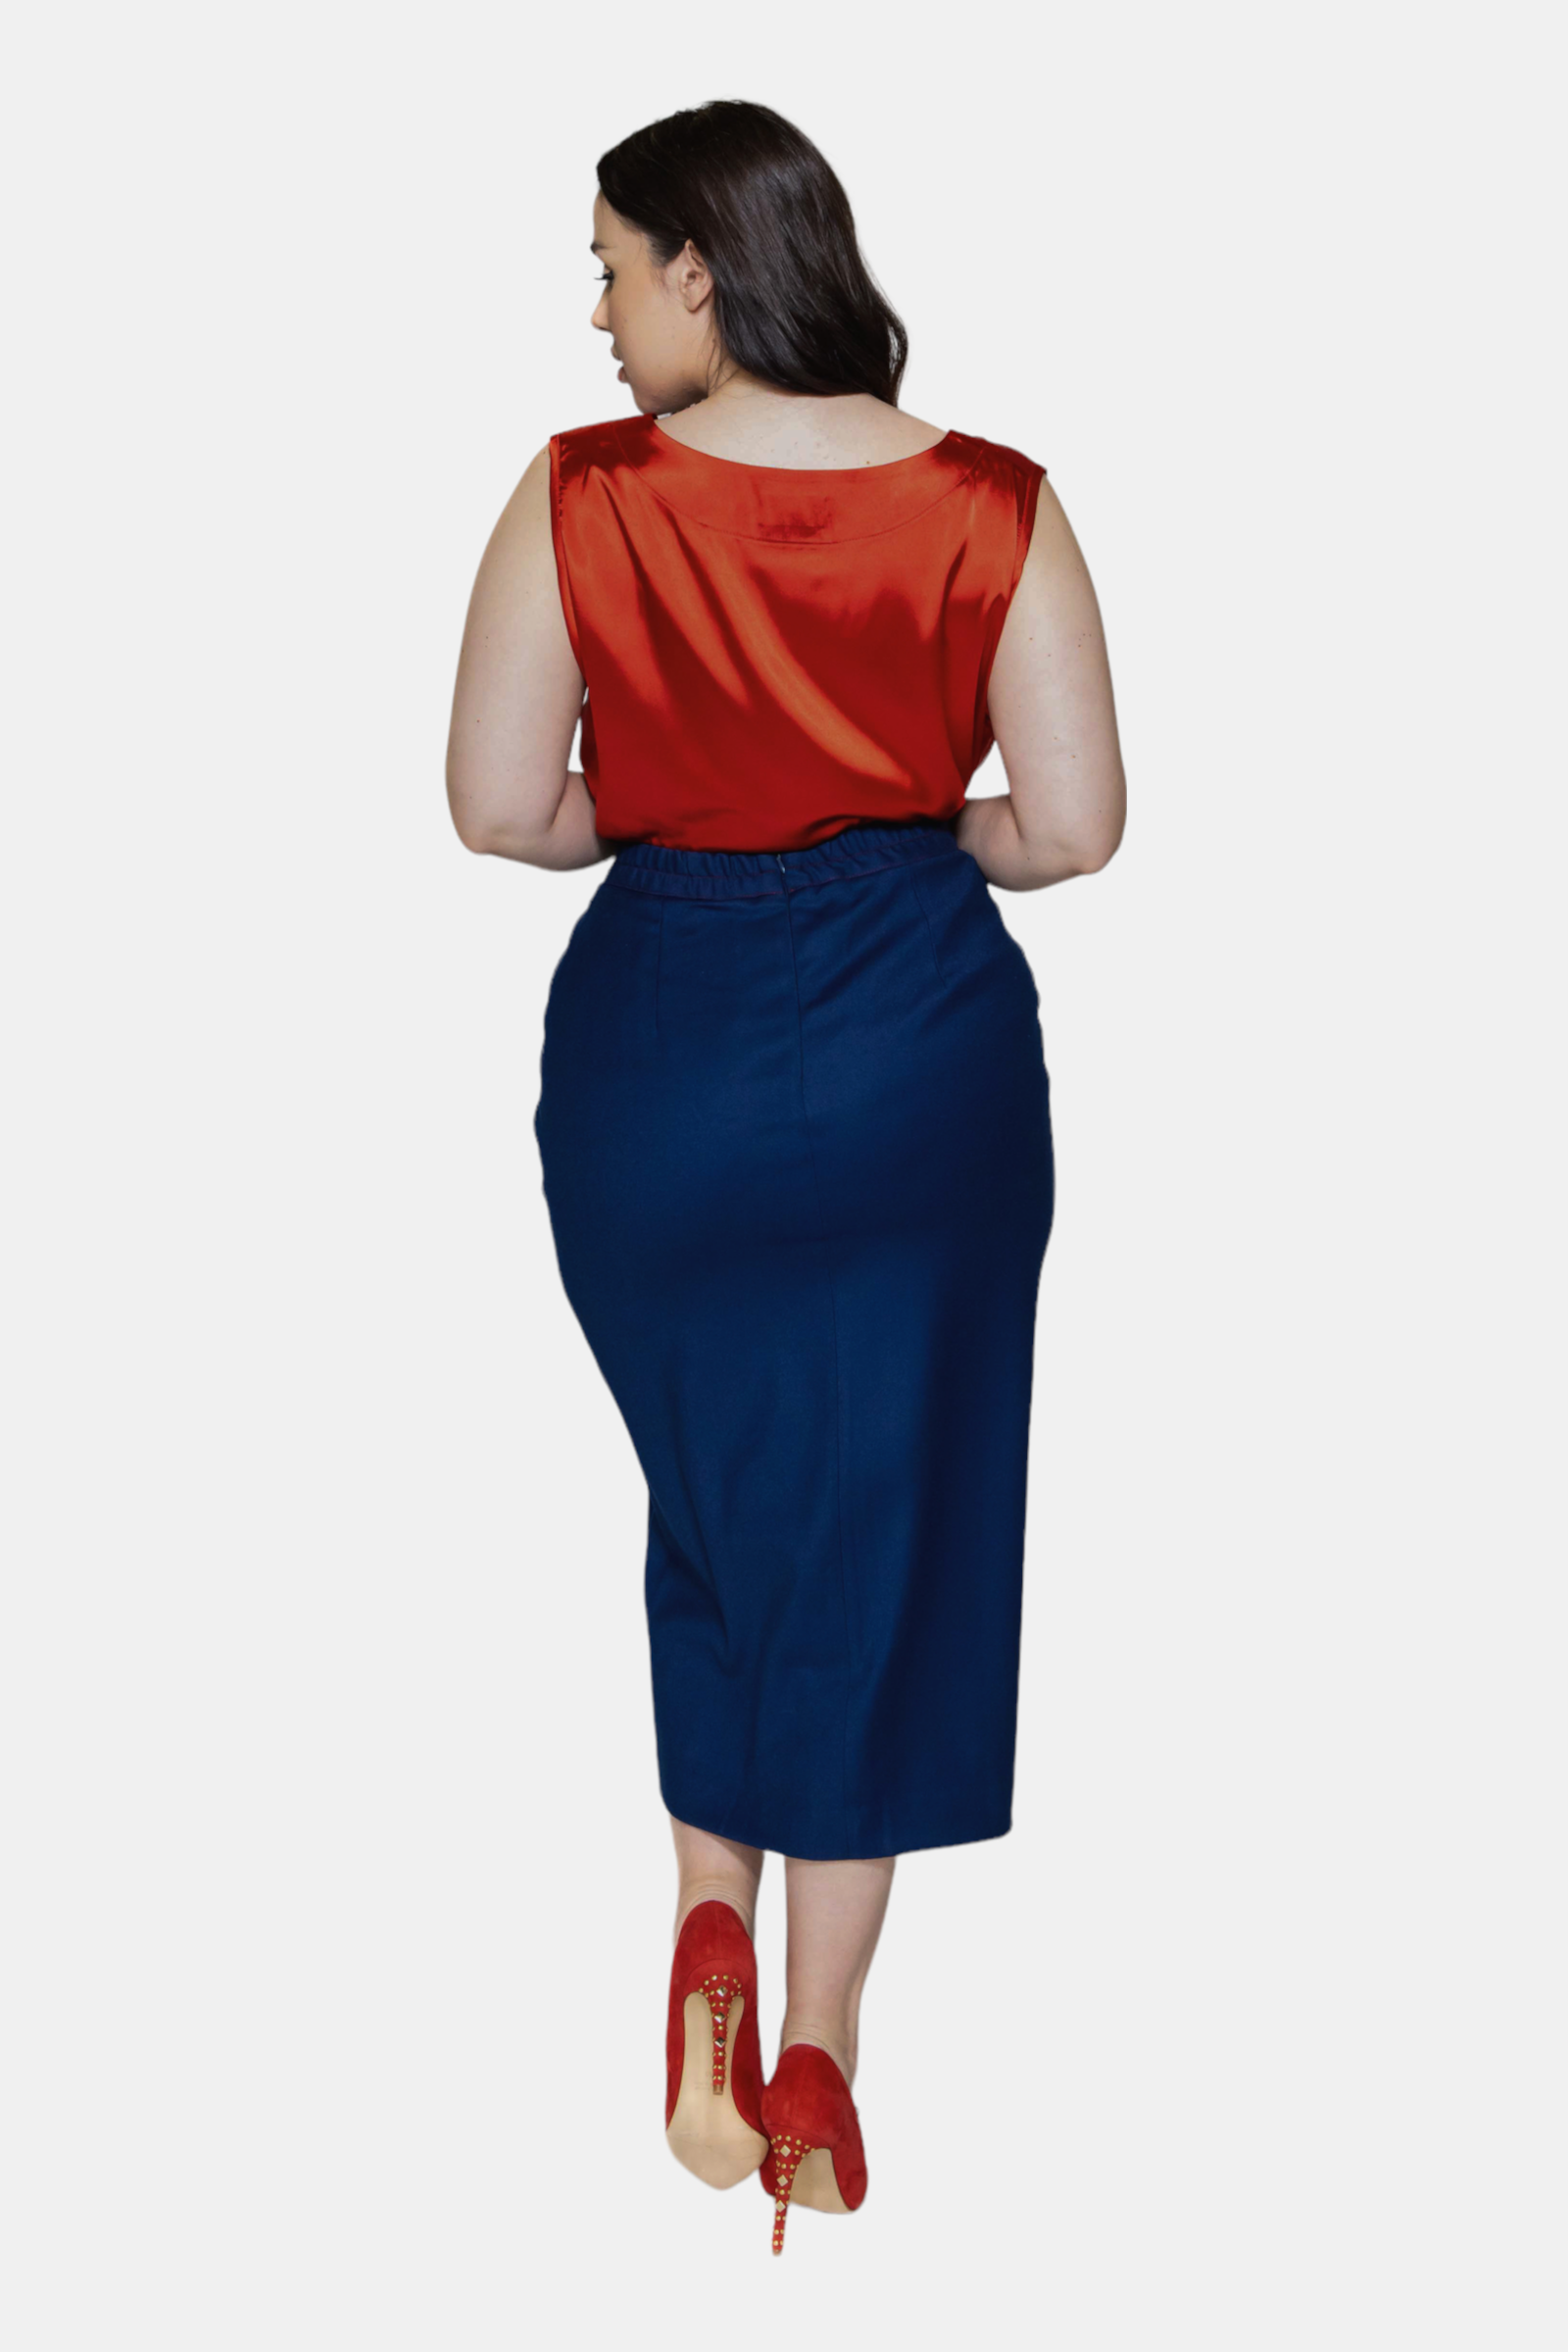 Sara Sabella 2-Piece Set Navy Blue Jacket & Midi Skirt Suit Set Plus Size Elastic Waist Skirt- Made in Italy Women's Suit Clothing